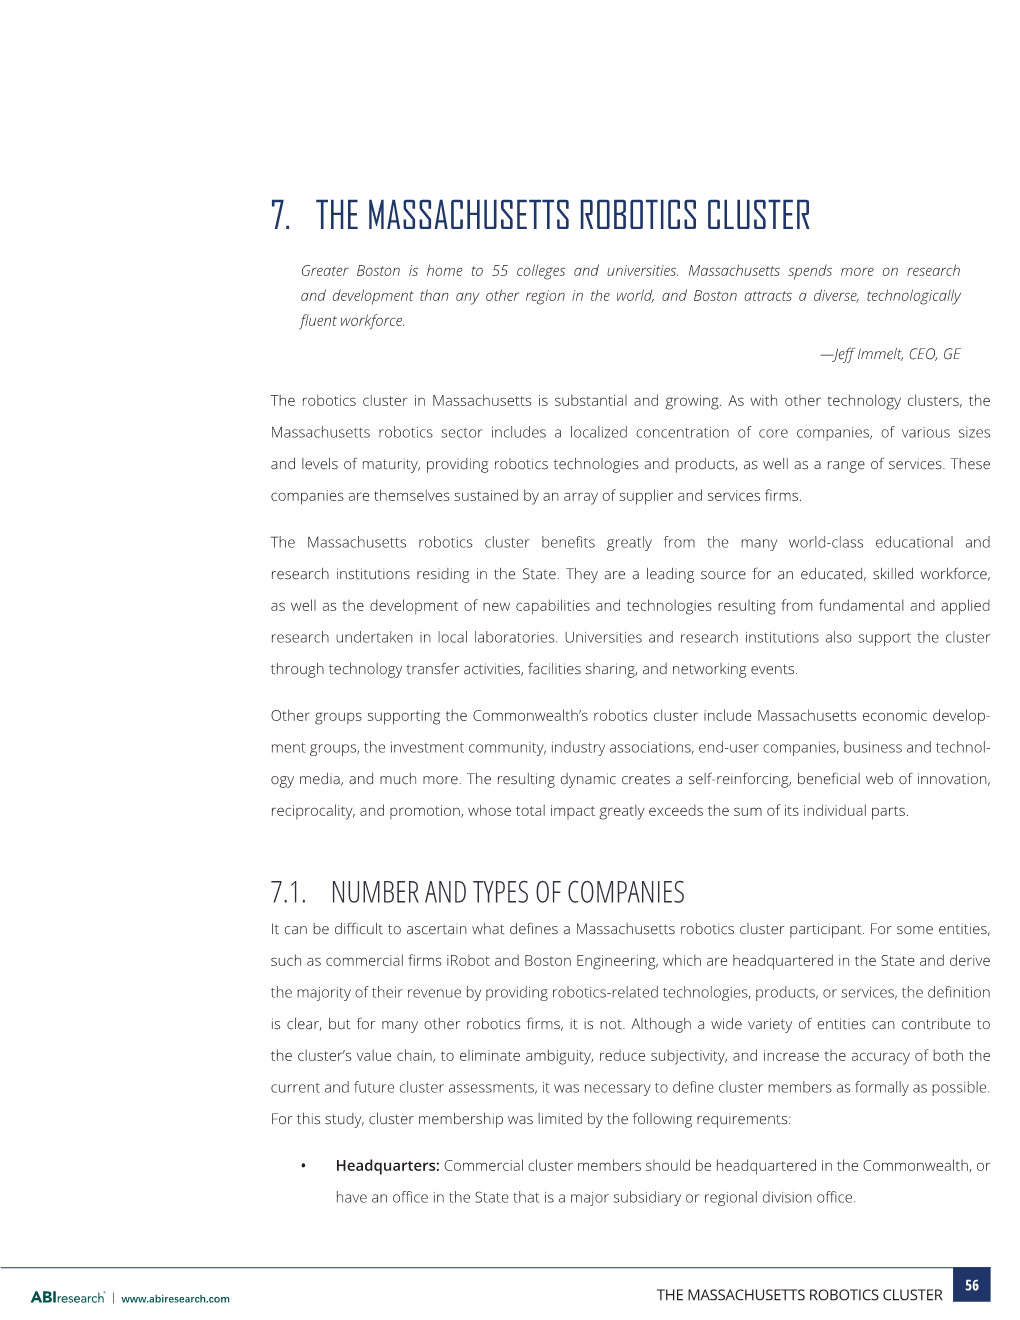 7. the Massachusetts Robotics Cluster